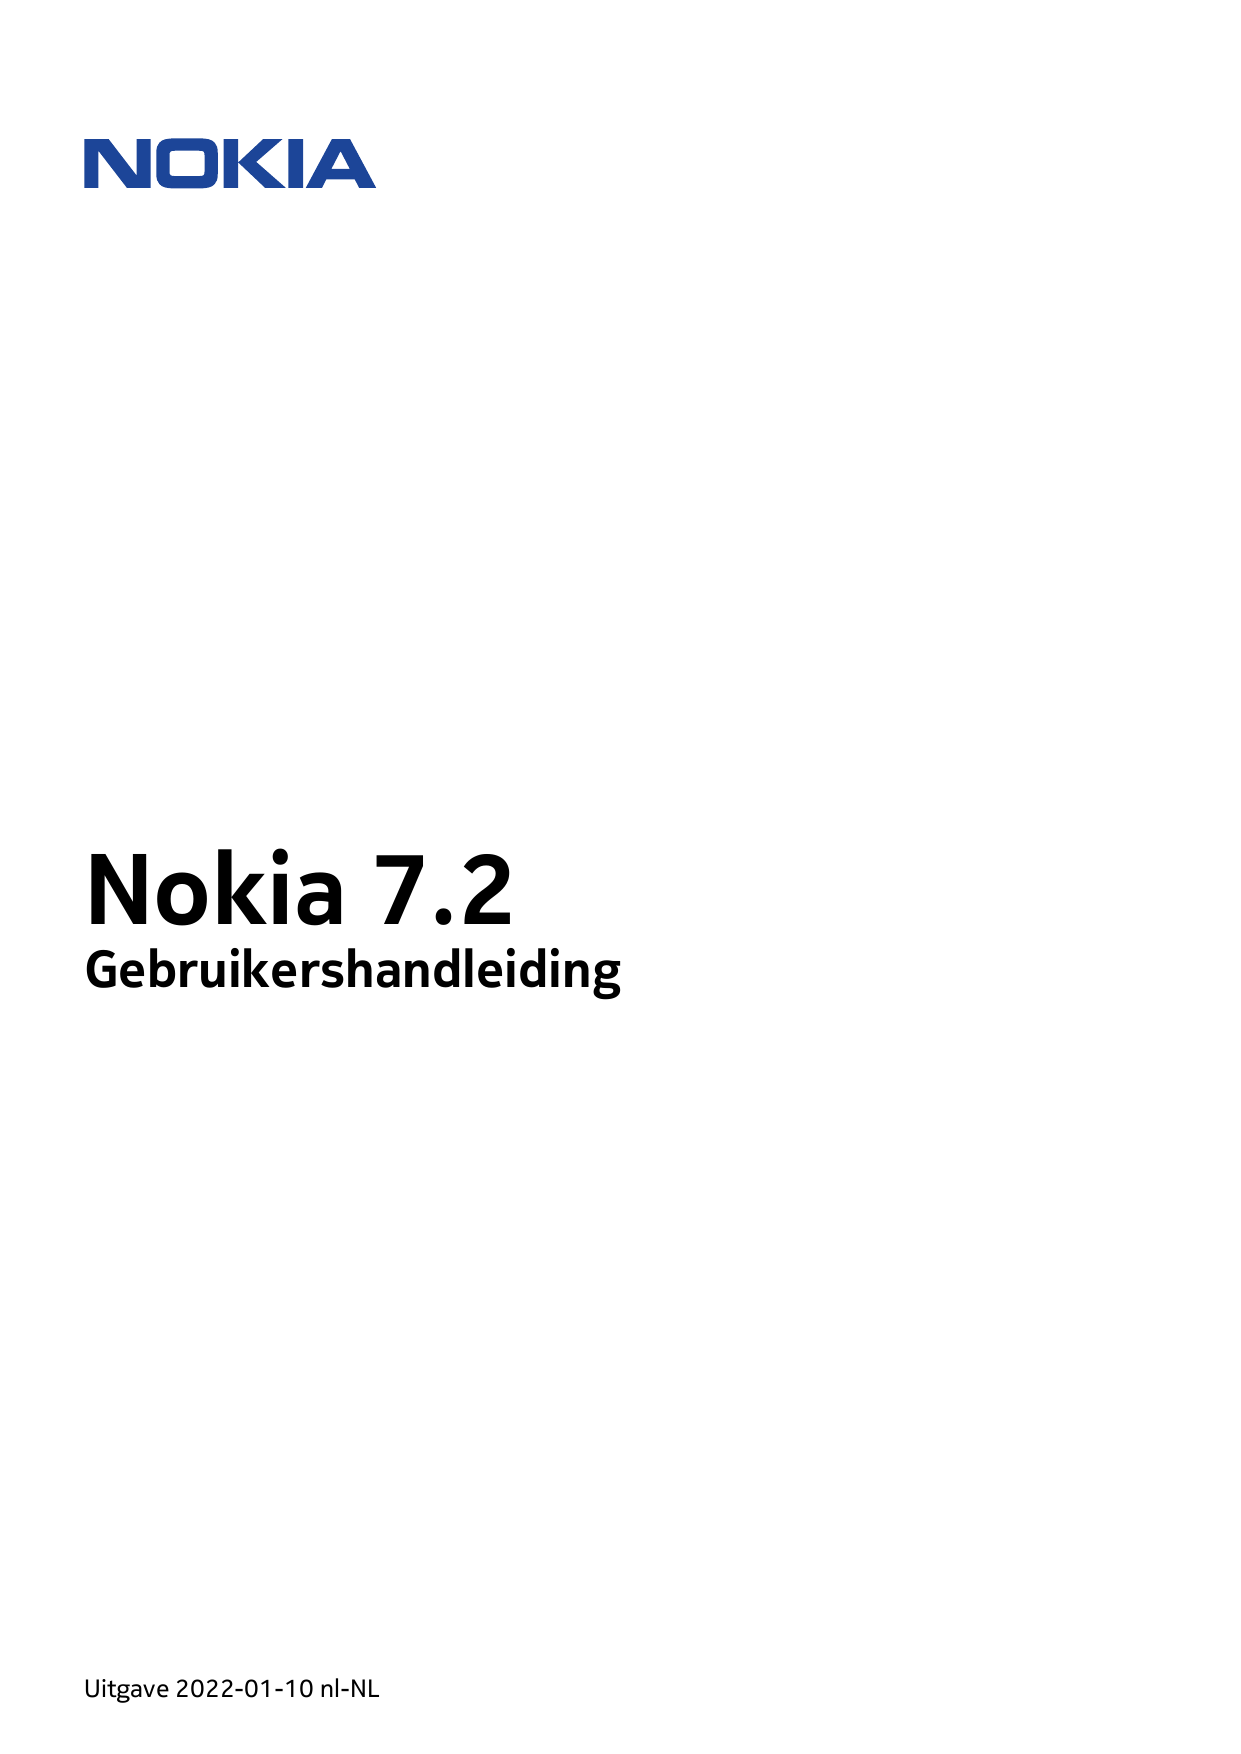 Nokia 7.2GebruikershandleidingUitgave 2022-01-10 nl-NL